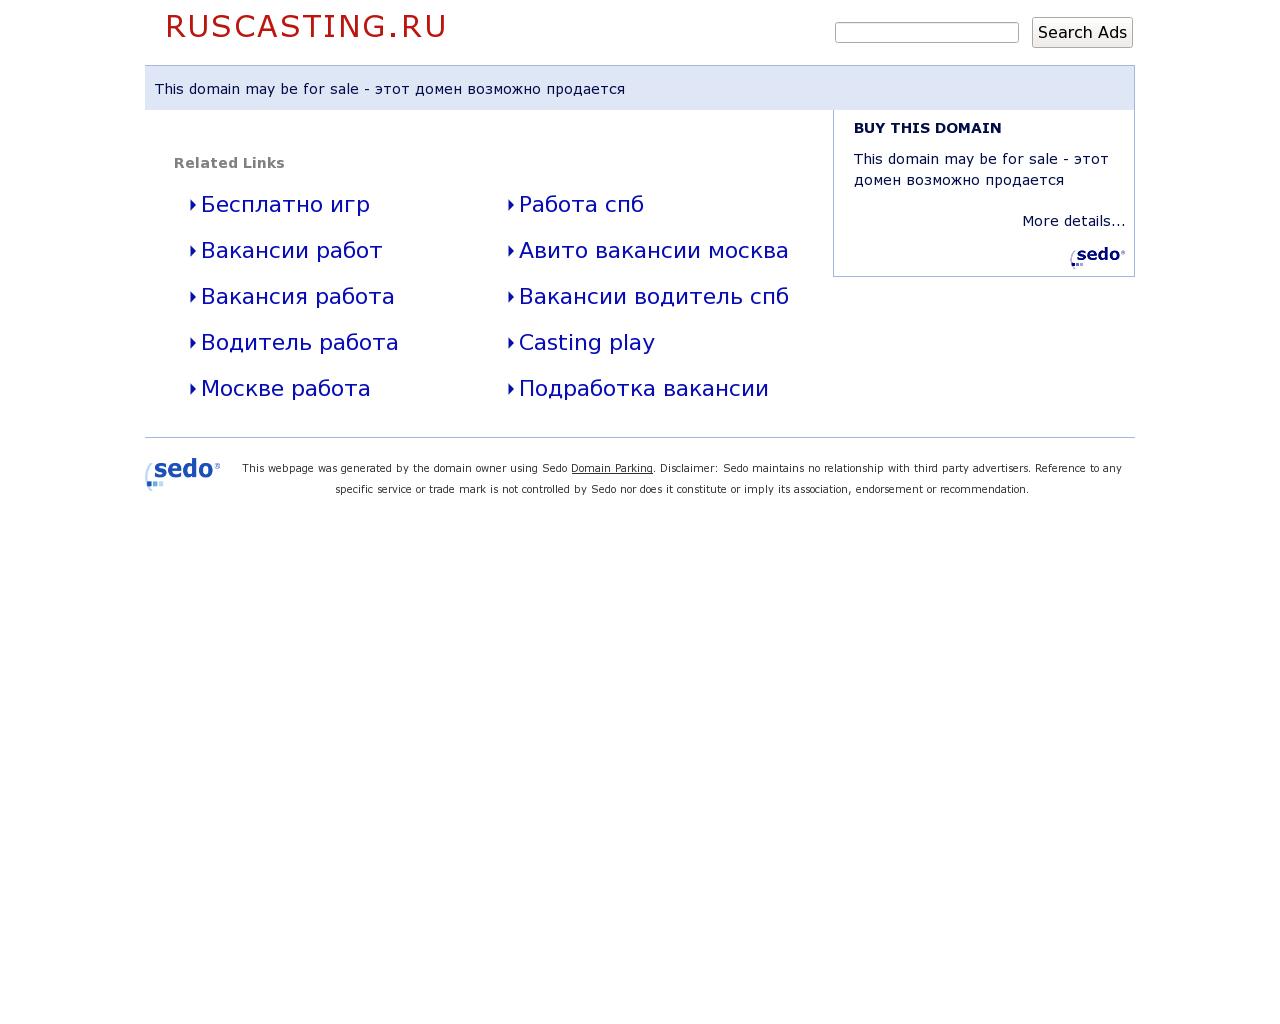 Изображение сайта ruscasting.ru в разрешении 1280x1024